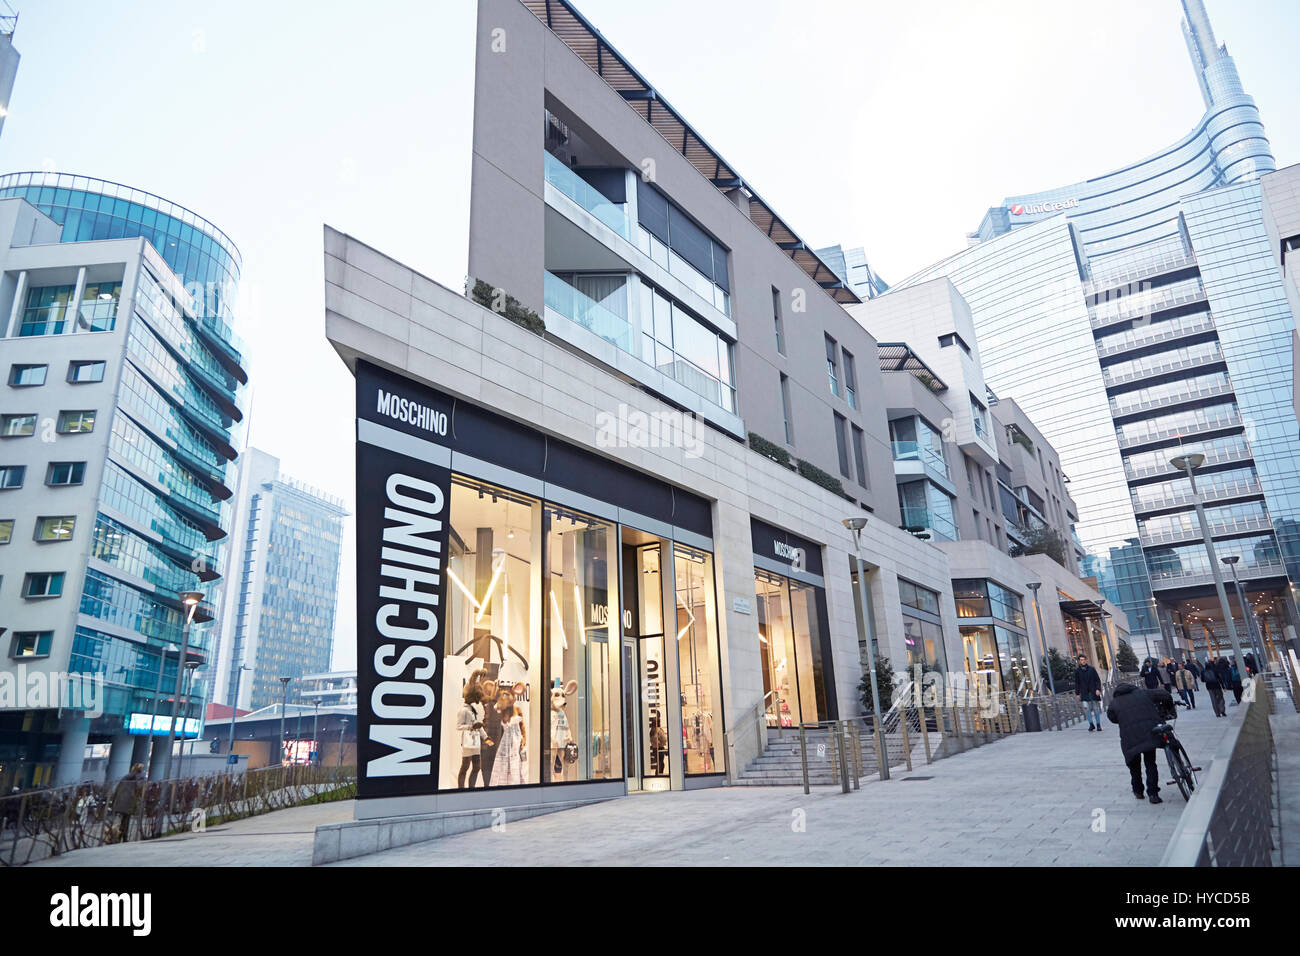 Milano new fashion district: Moschino and Dsquared luxury shop window,  travel destination Porta Garibaldi, Milano Stock Photo - Alamy